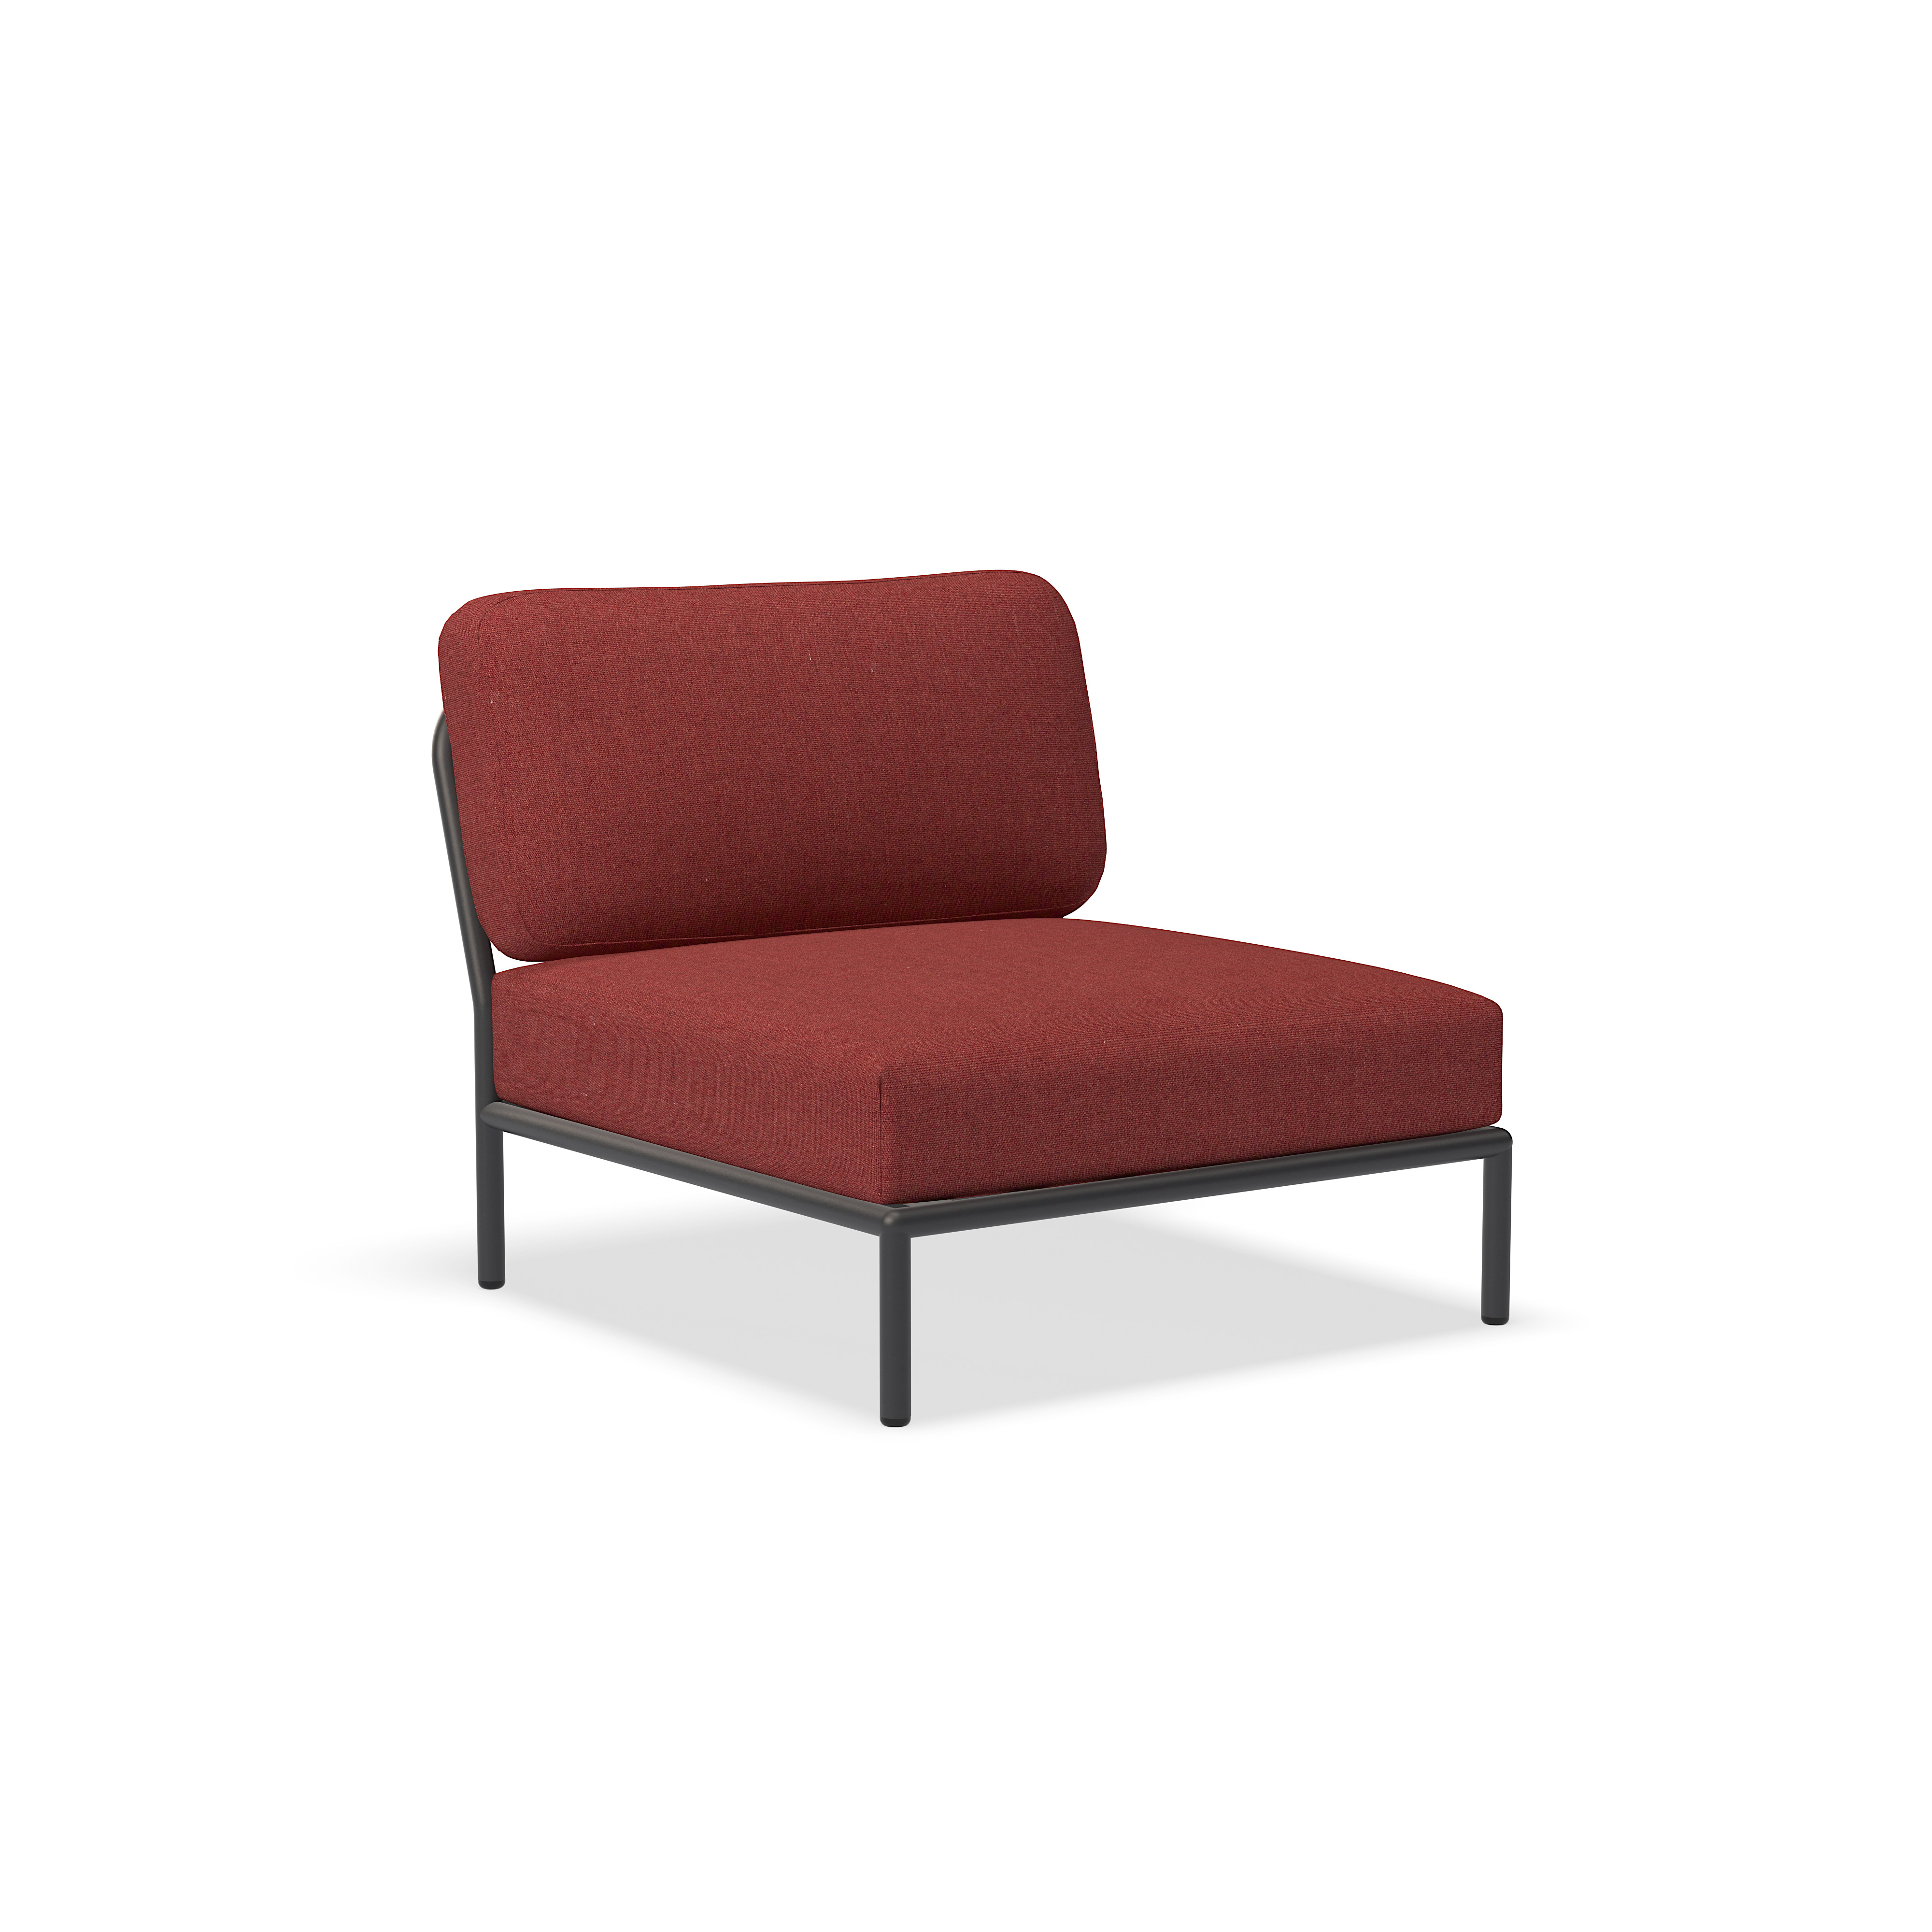 الكرسي - 12205-1651 - كرسي ، قرمزي (HERITAGE) ، هيكل رمادي غامق